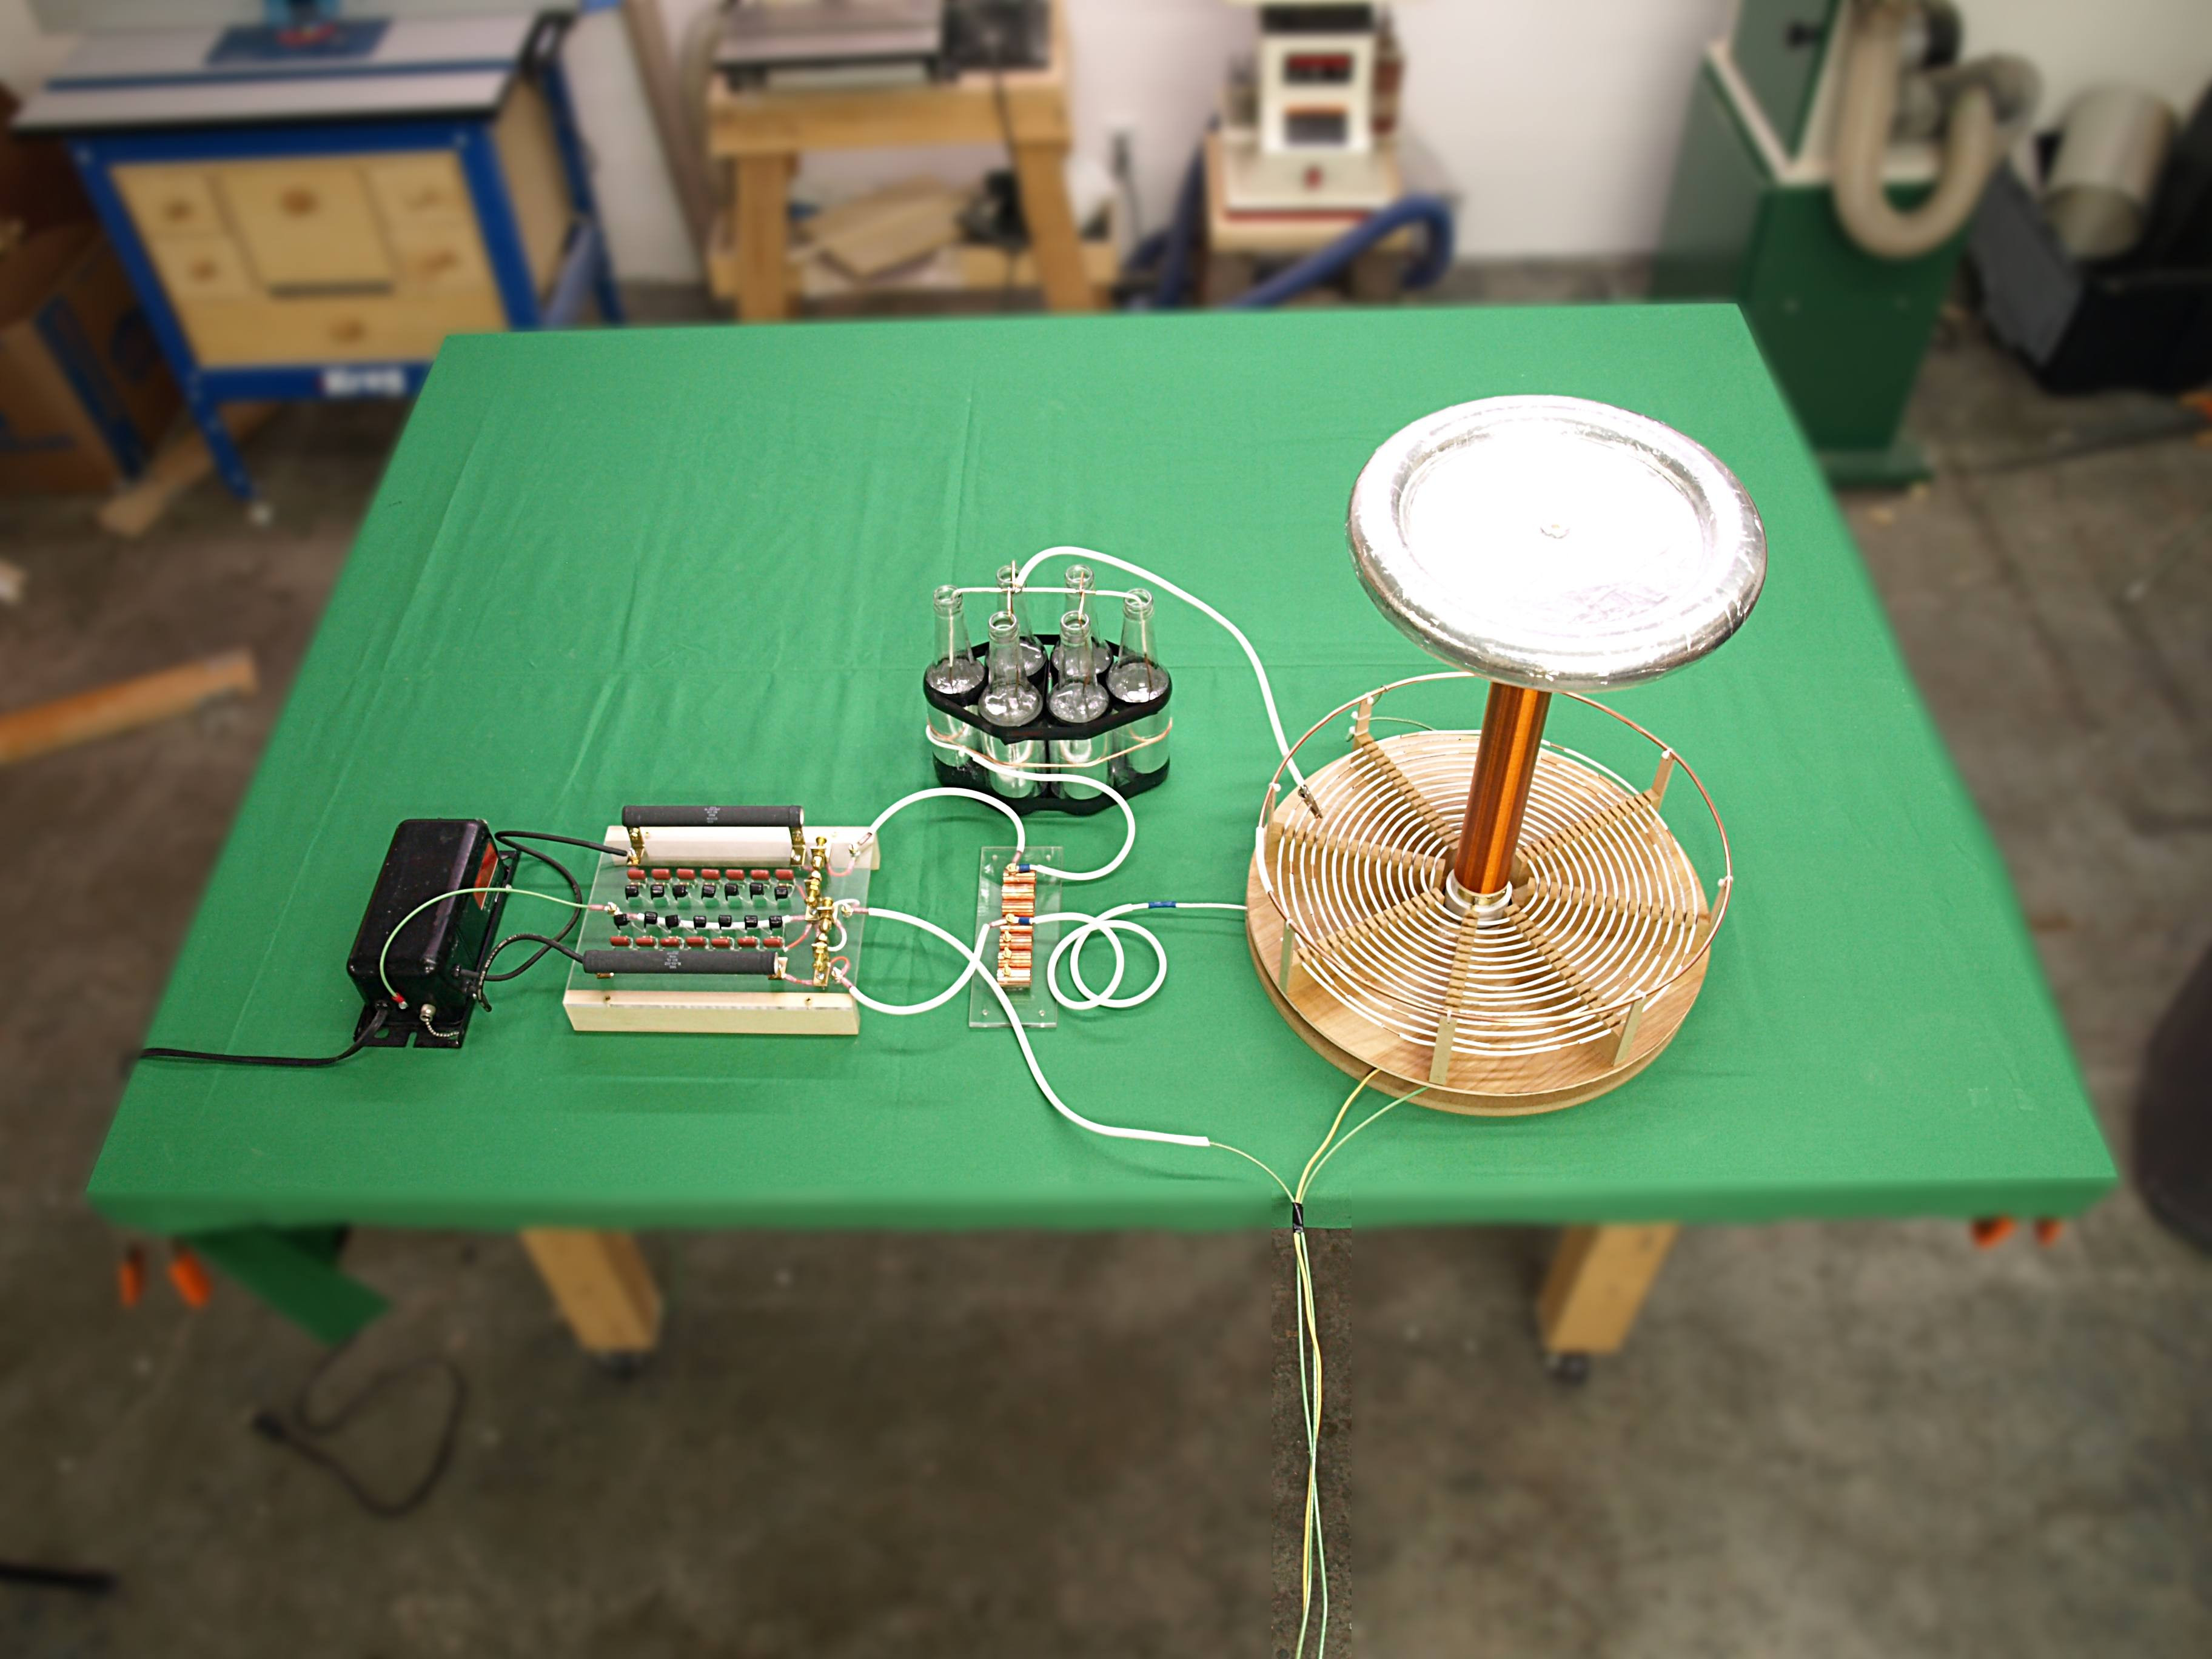 Best ideas about DIY Tesla Coils
. Save or Pin DIY Resonance Studio Workshop Now.